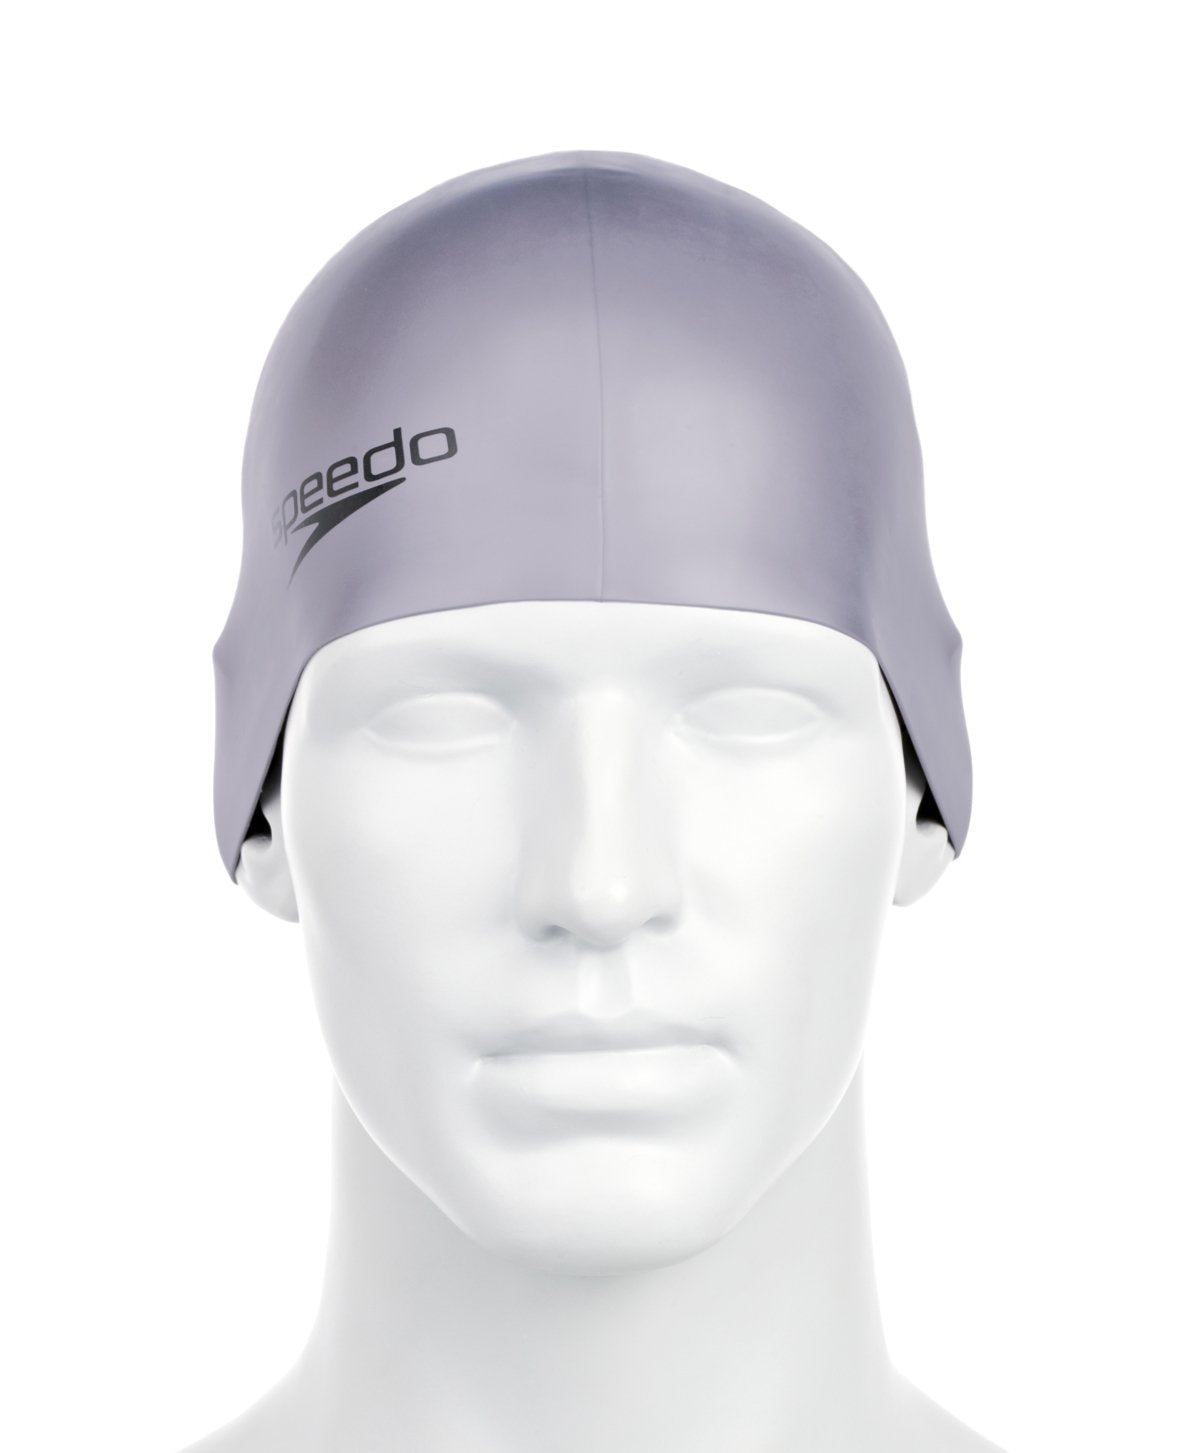 Speedo Silicon Moulded Swimcap (Grey) - Best Price online Prokicksports.com